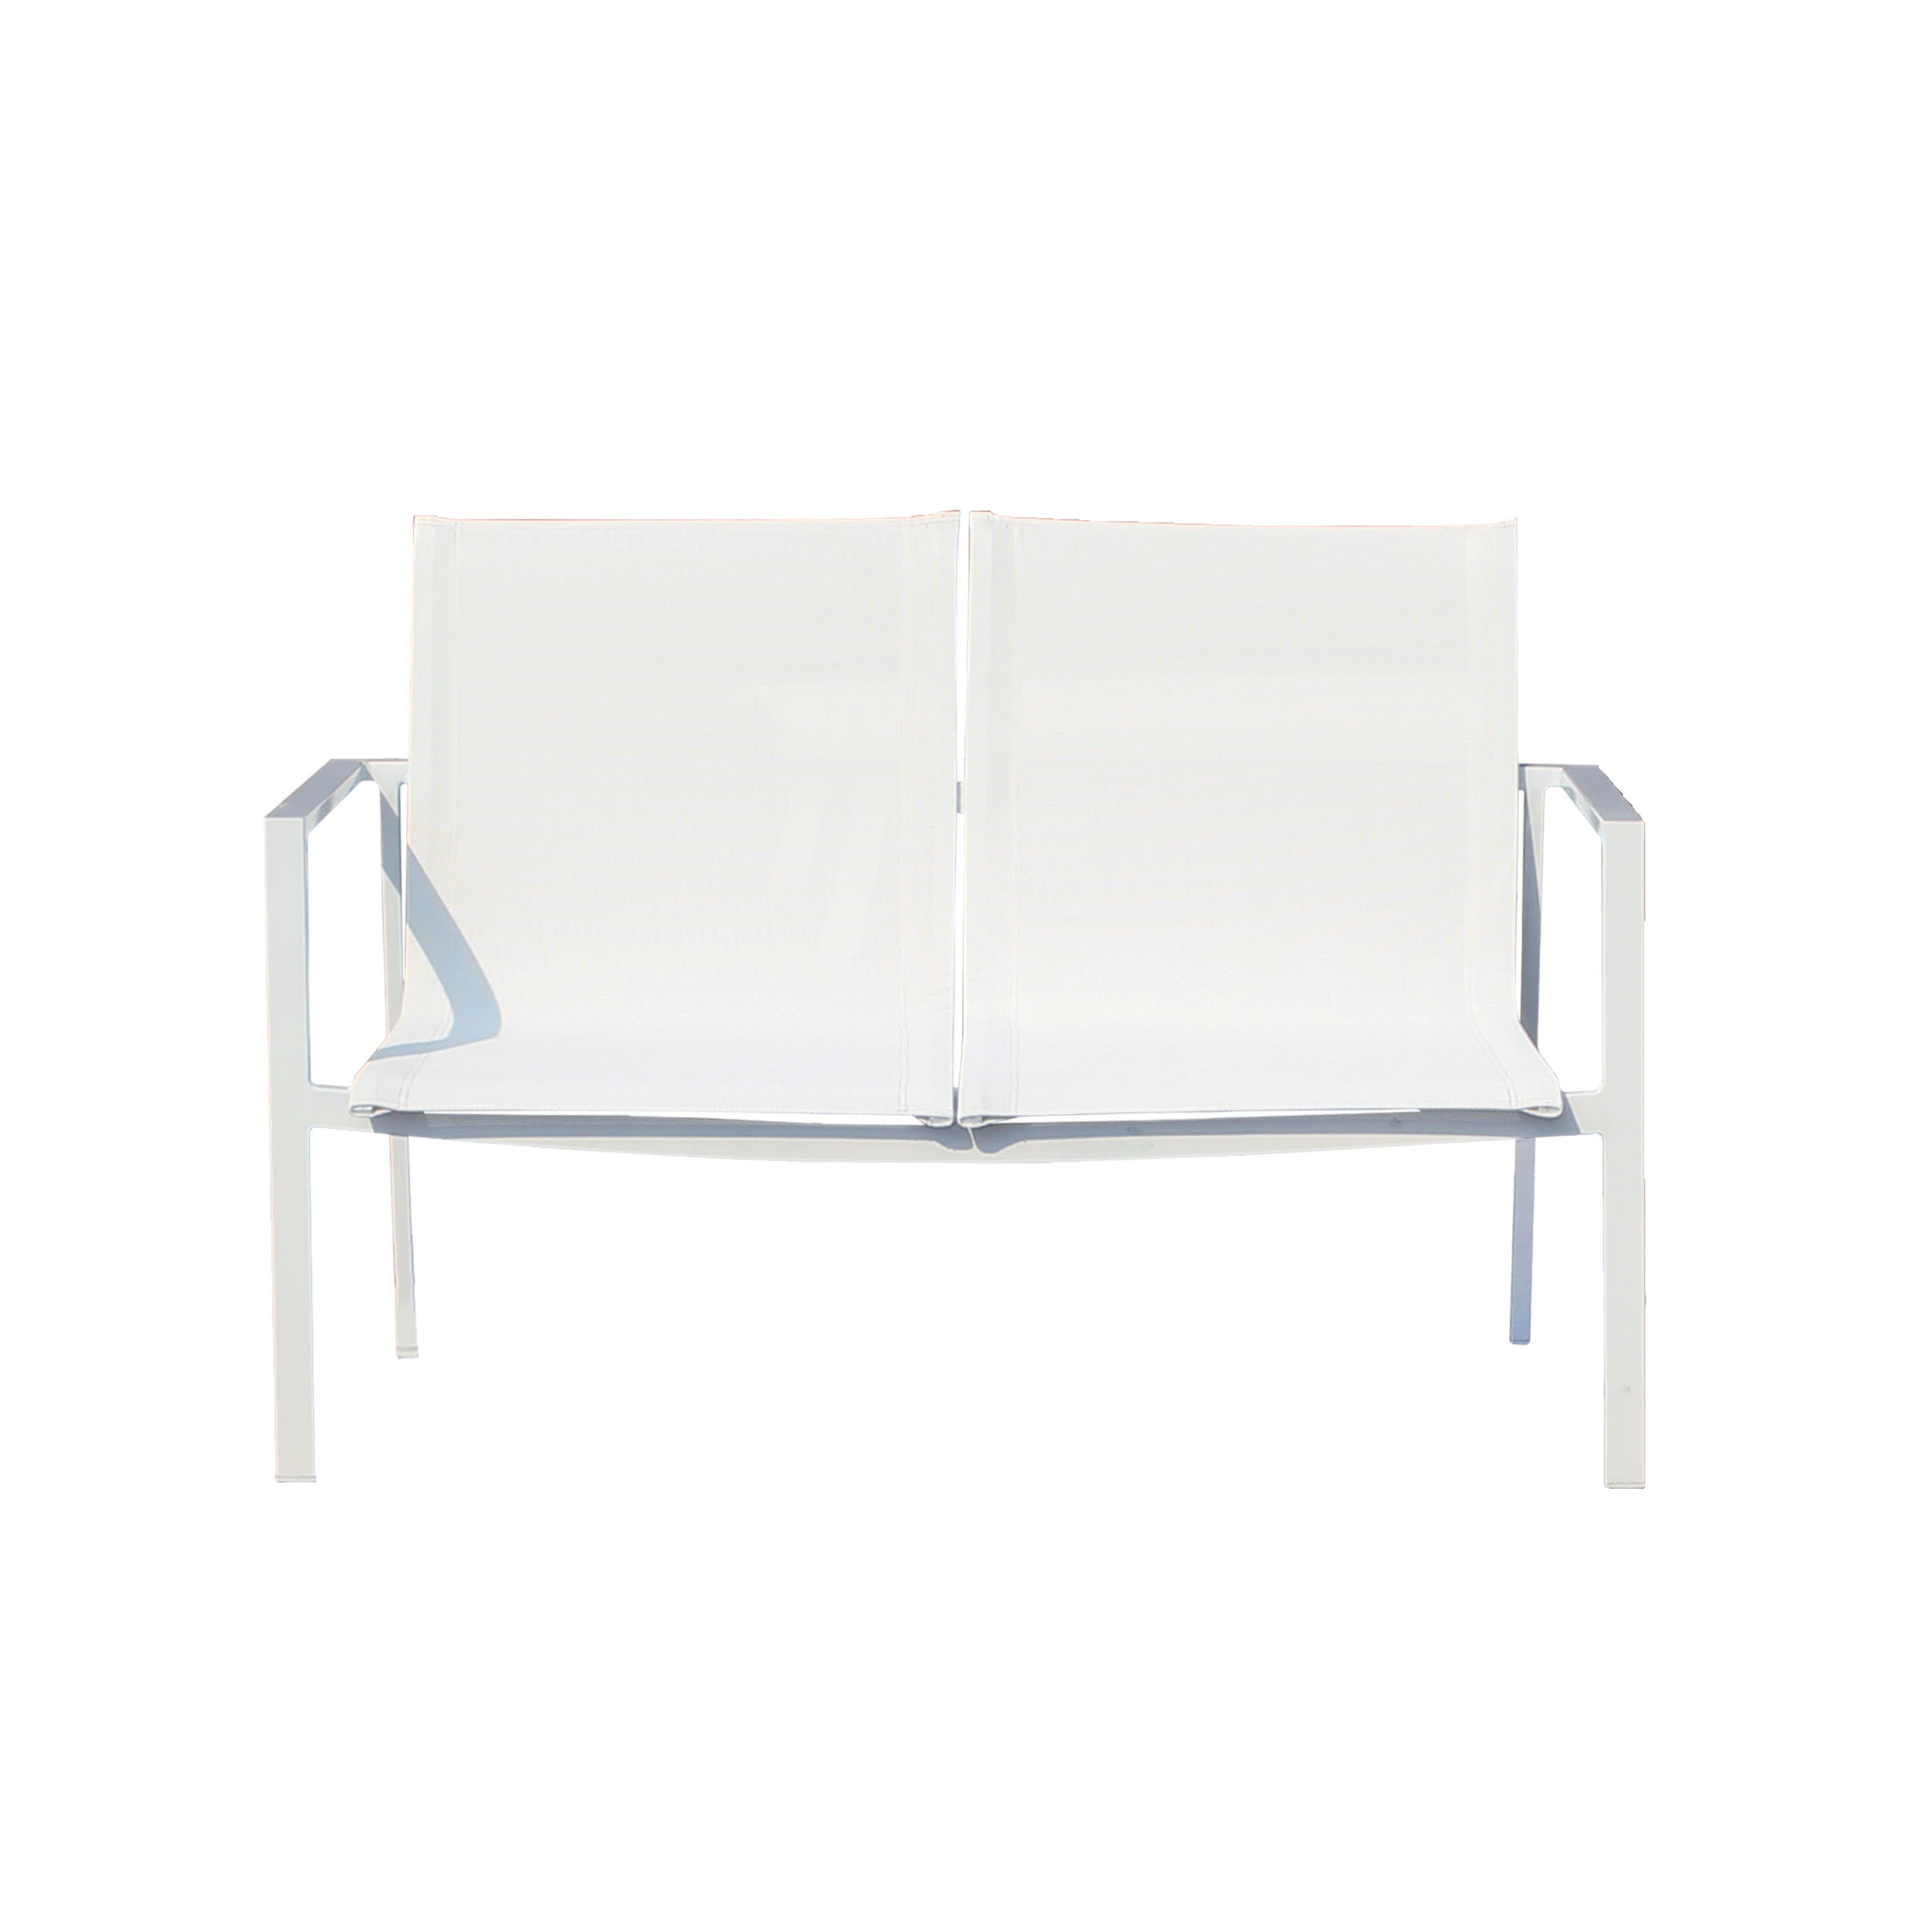 Valencia textile 2-seat chair S2